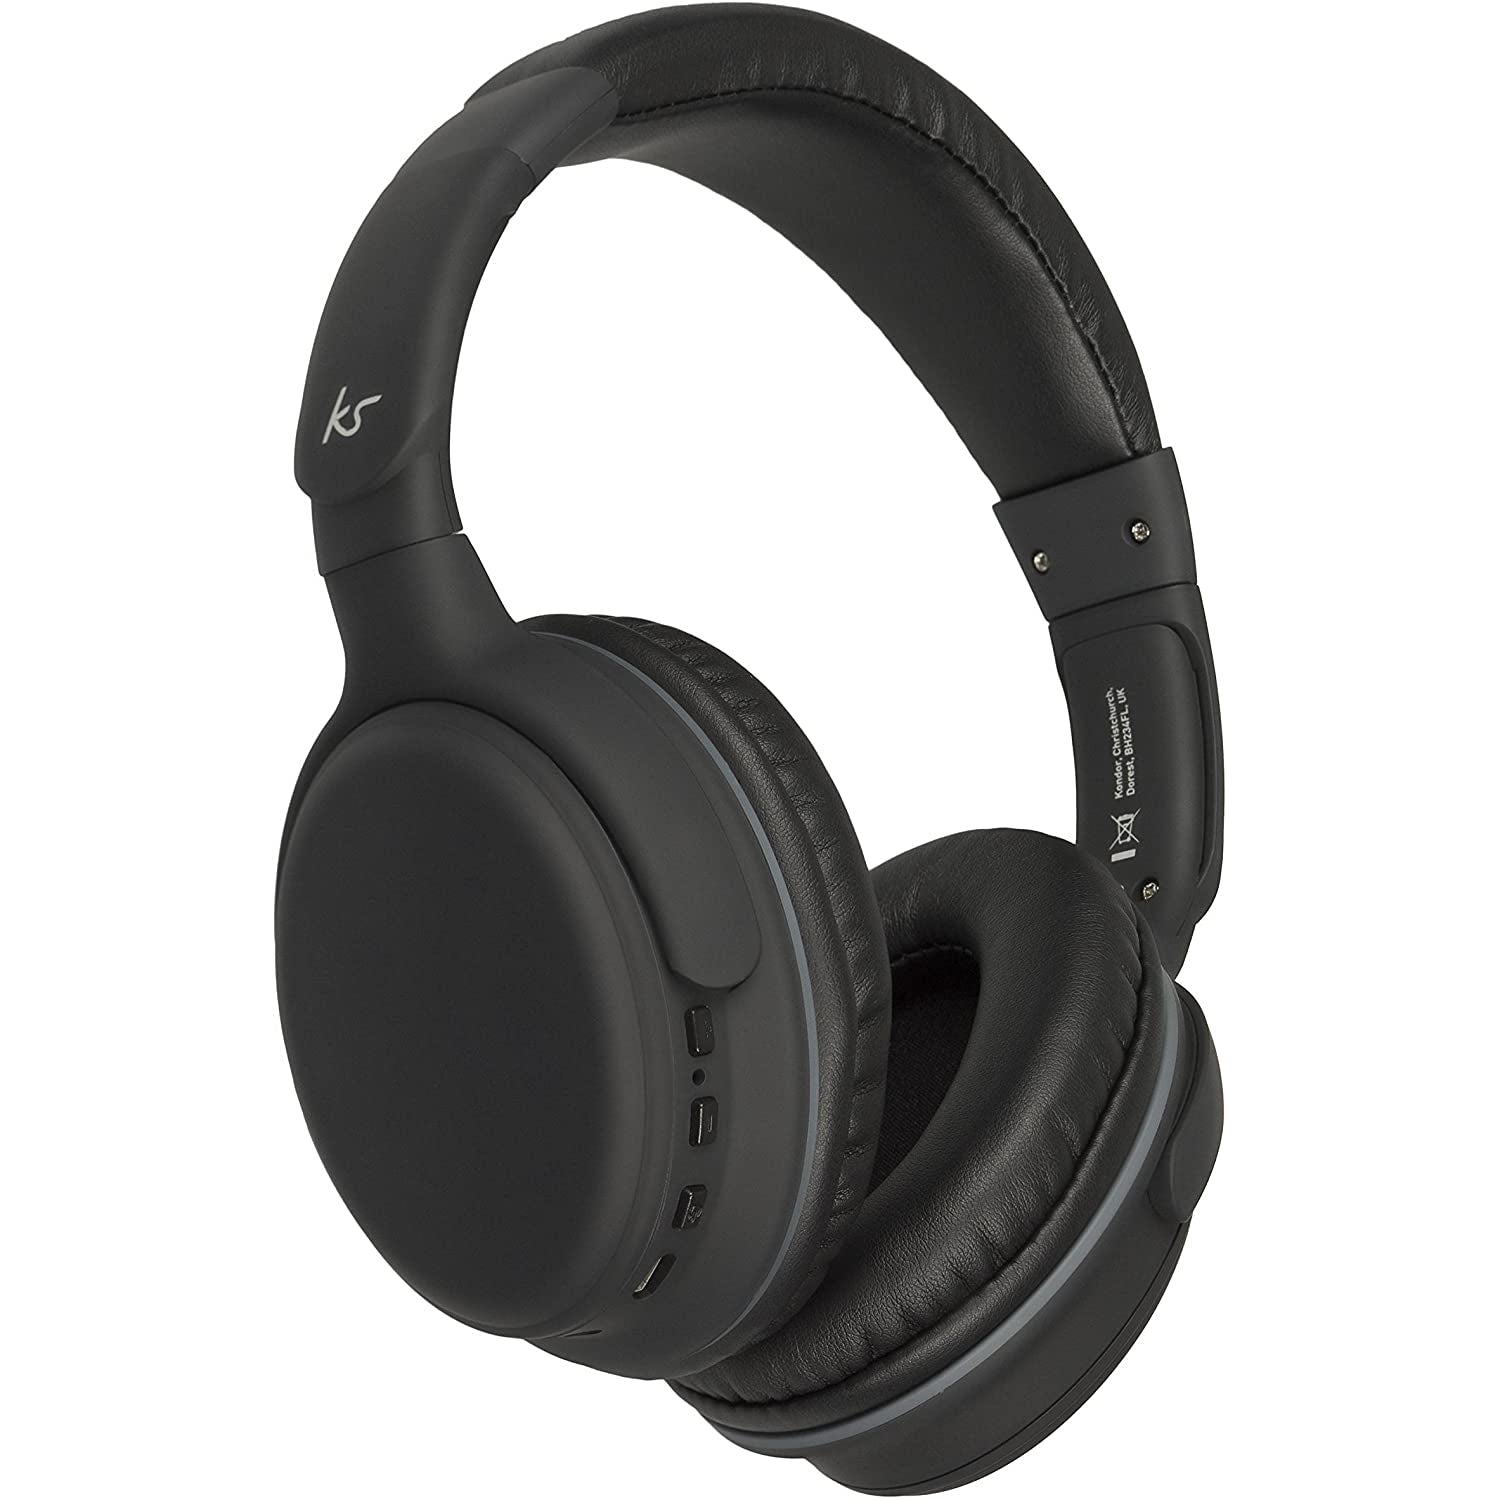 KitSound Slammers Wireless On-Ear Headphones - Black - Refurbished Excellent